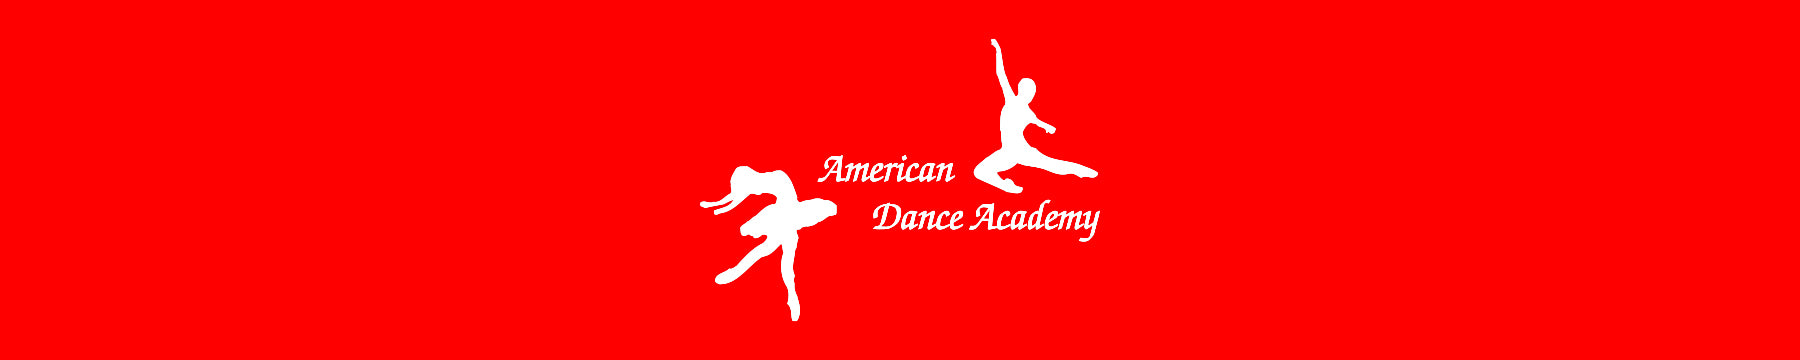 American Dance Academy